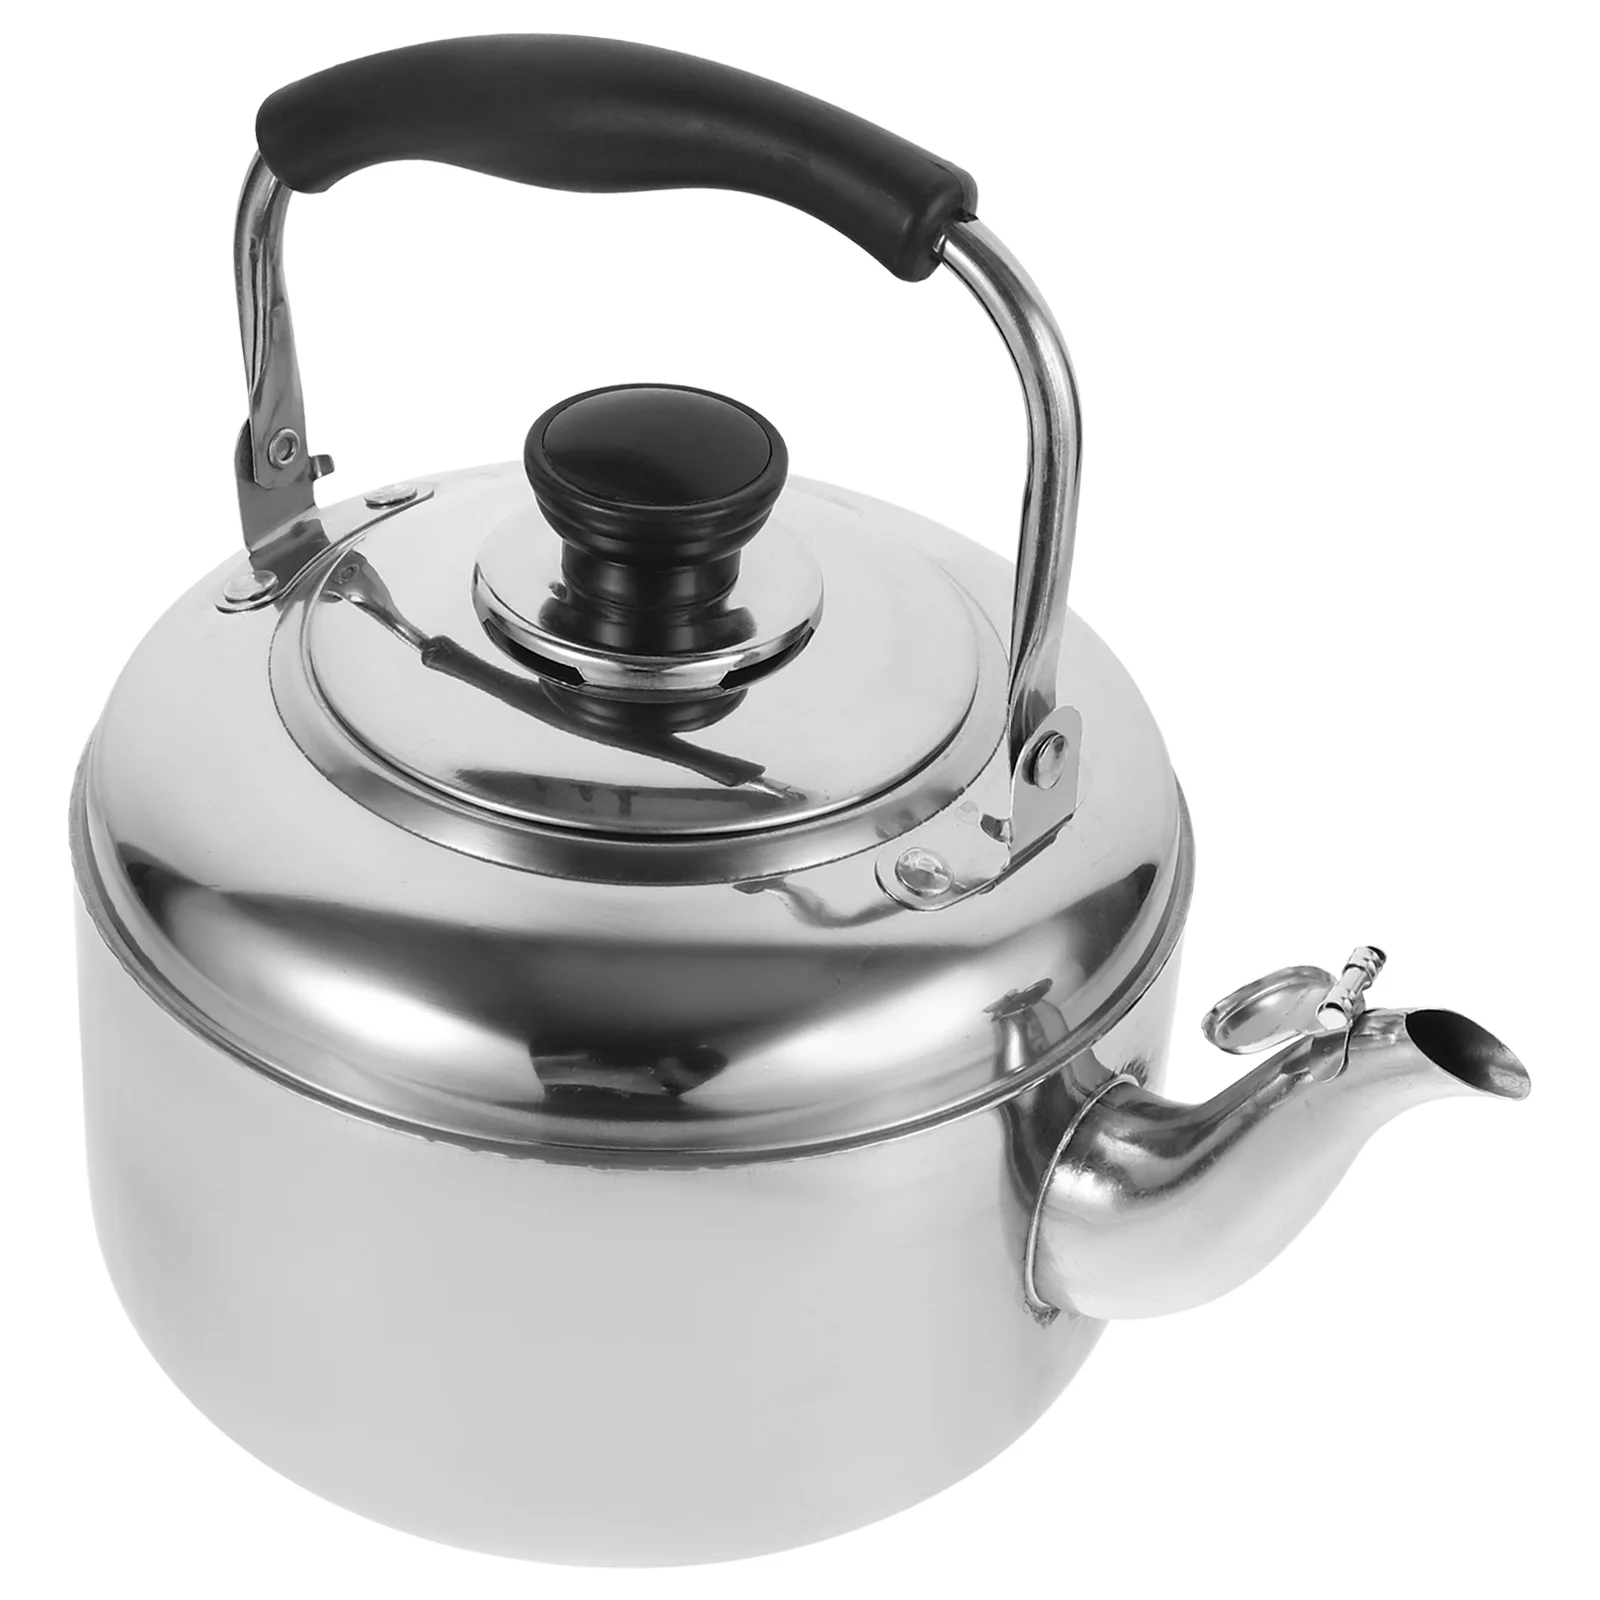 Stainless Steel Kettle Household Water Whistling Gooseneck Boiler Large Capacity Tea Heating Pot Camping Home-appliance